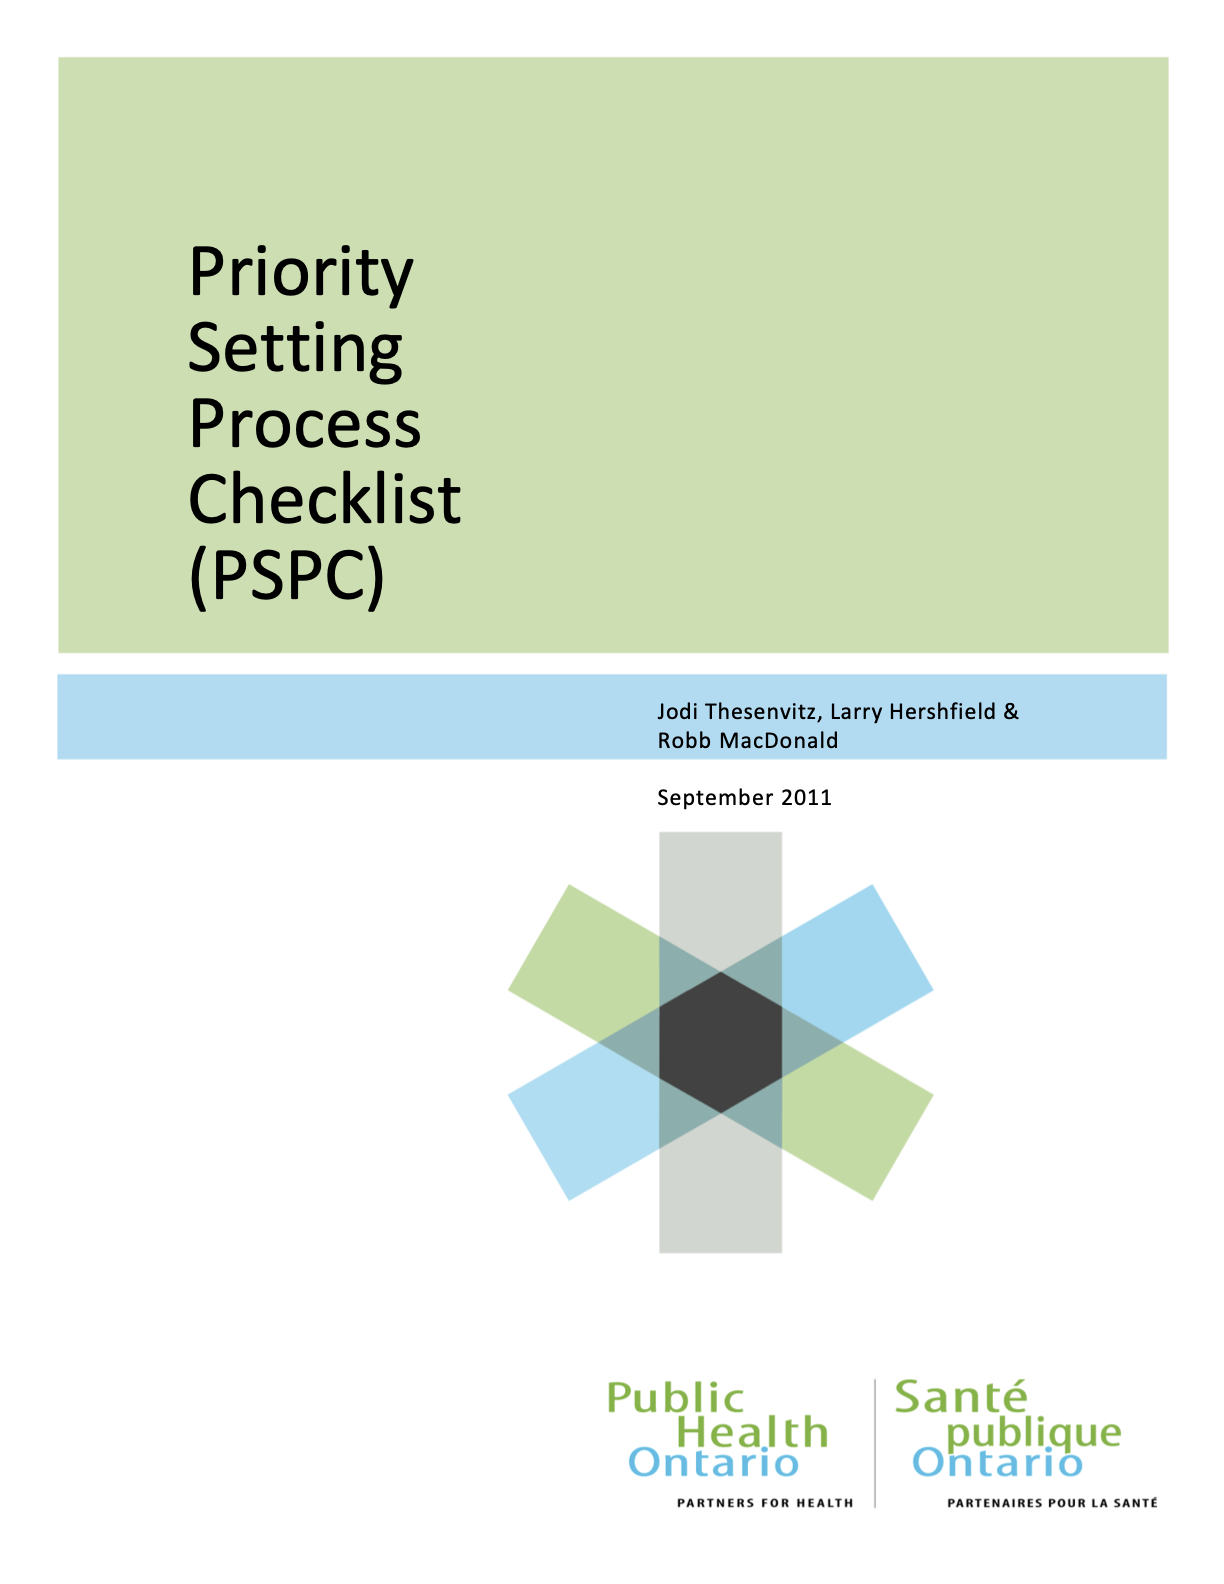 Priority Setting Process Checklist (PSPC)